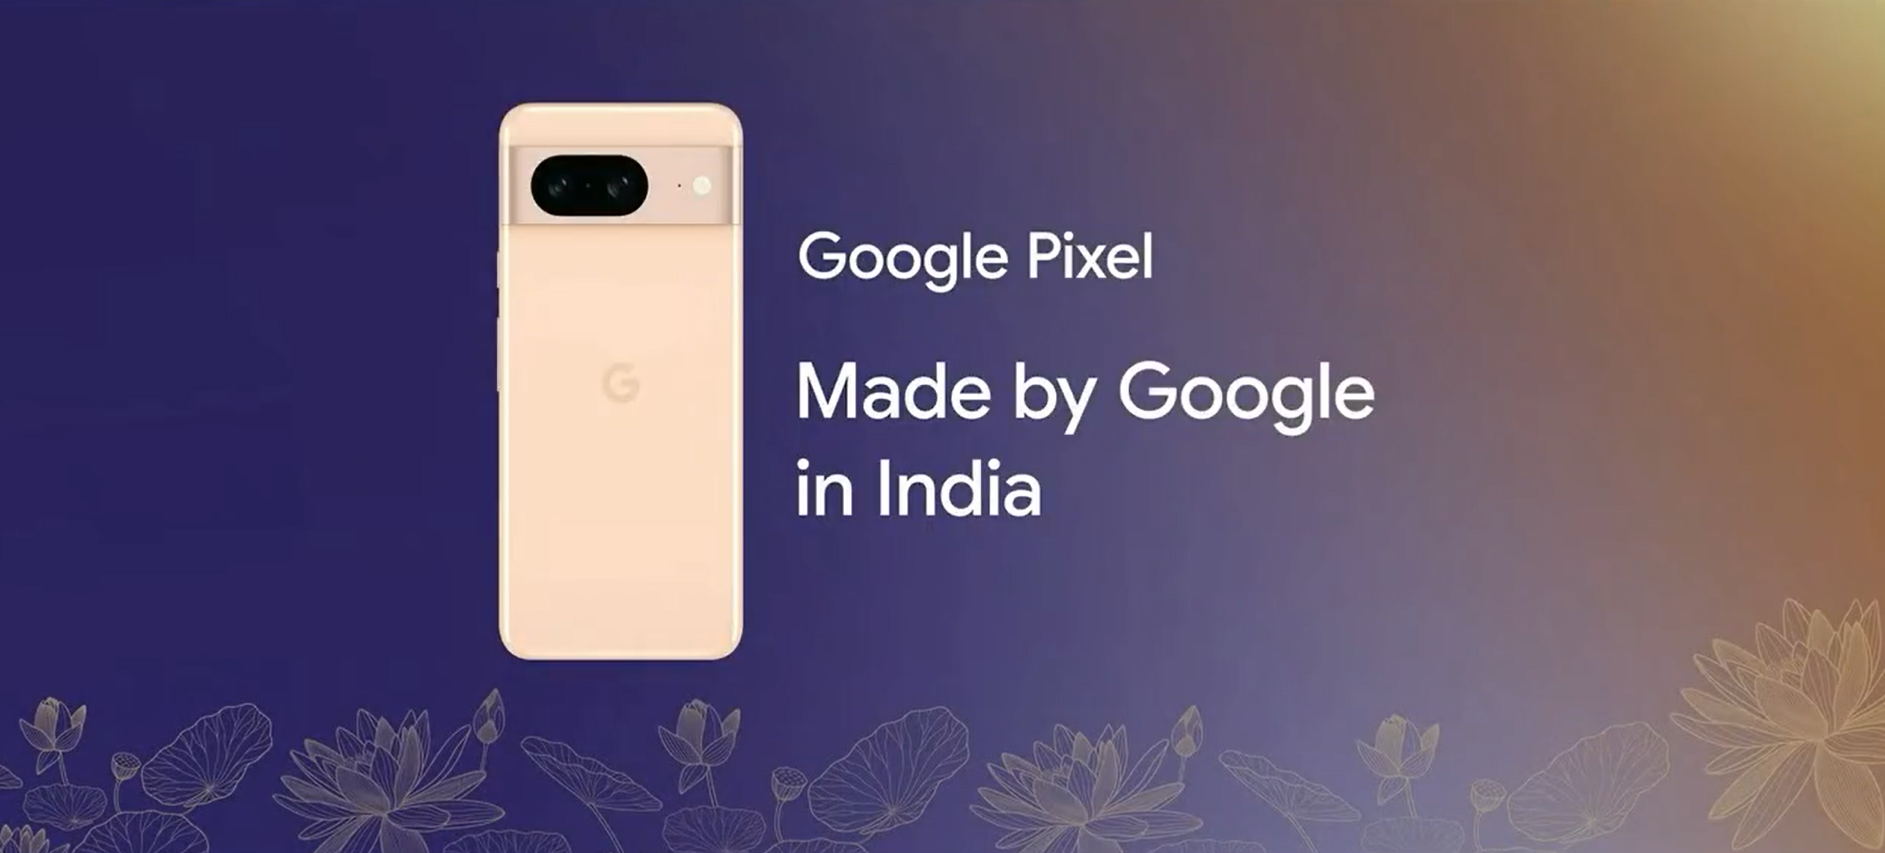 ‘Made in India’ Pixel phones soon, announces Google